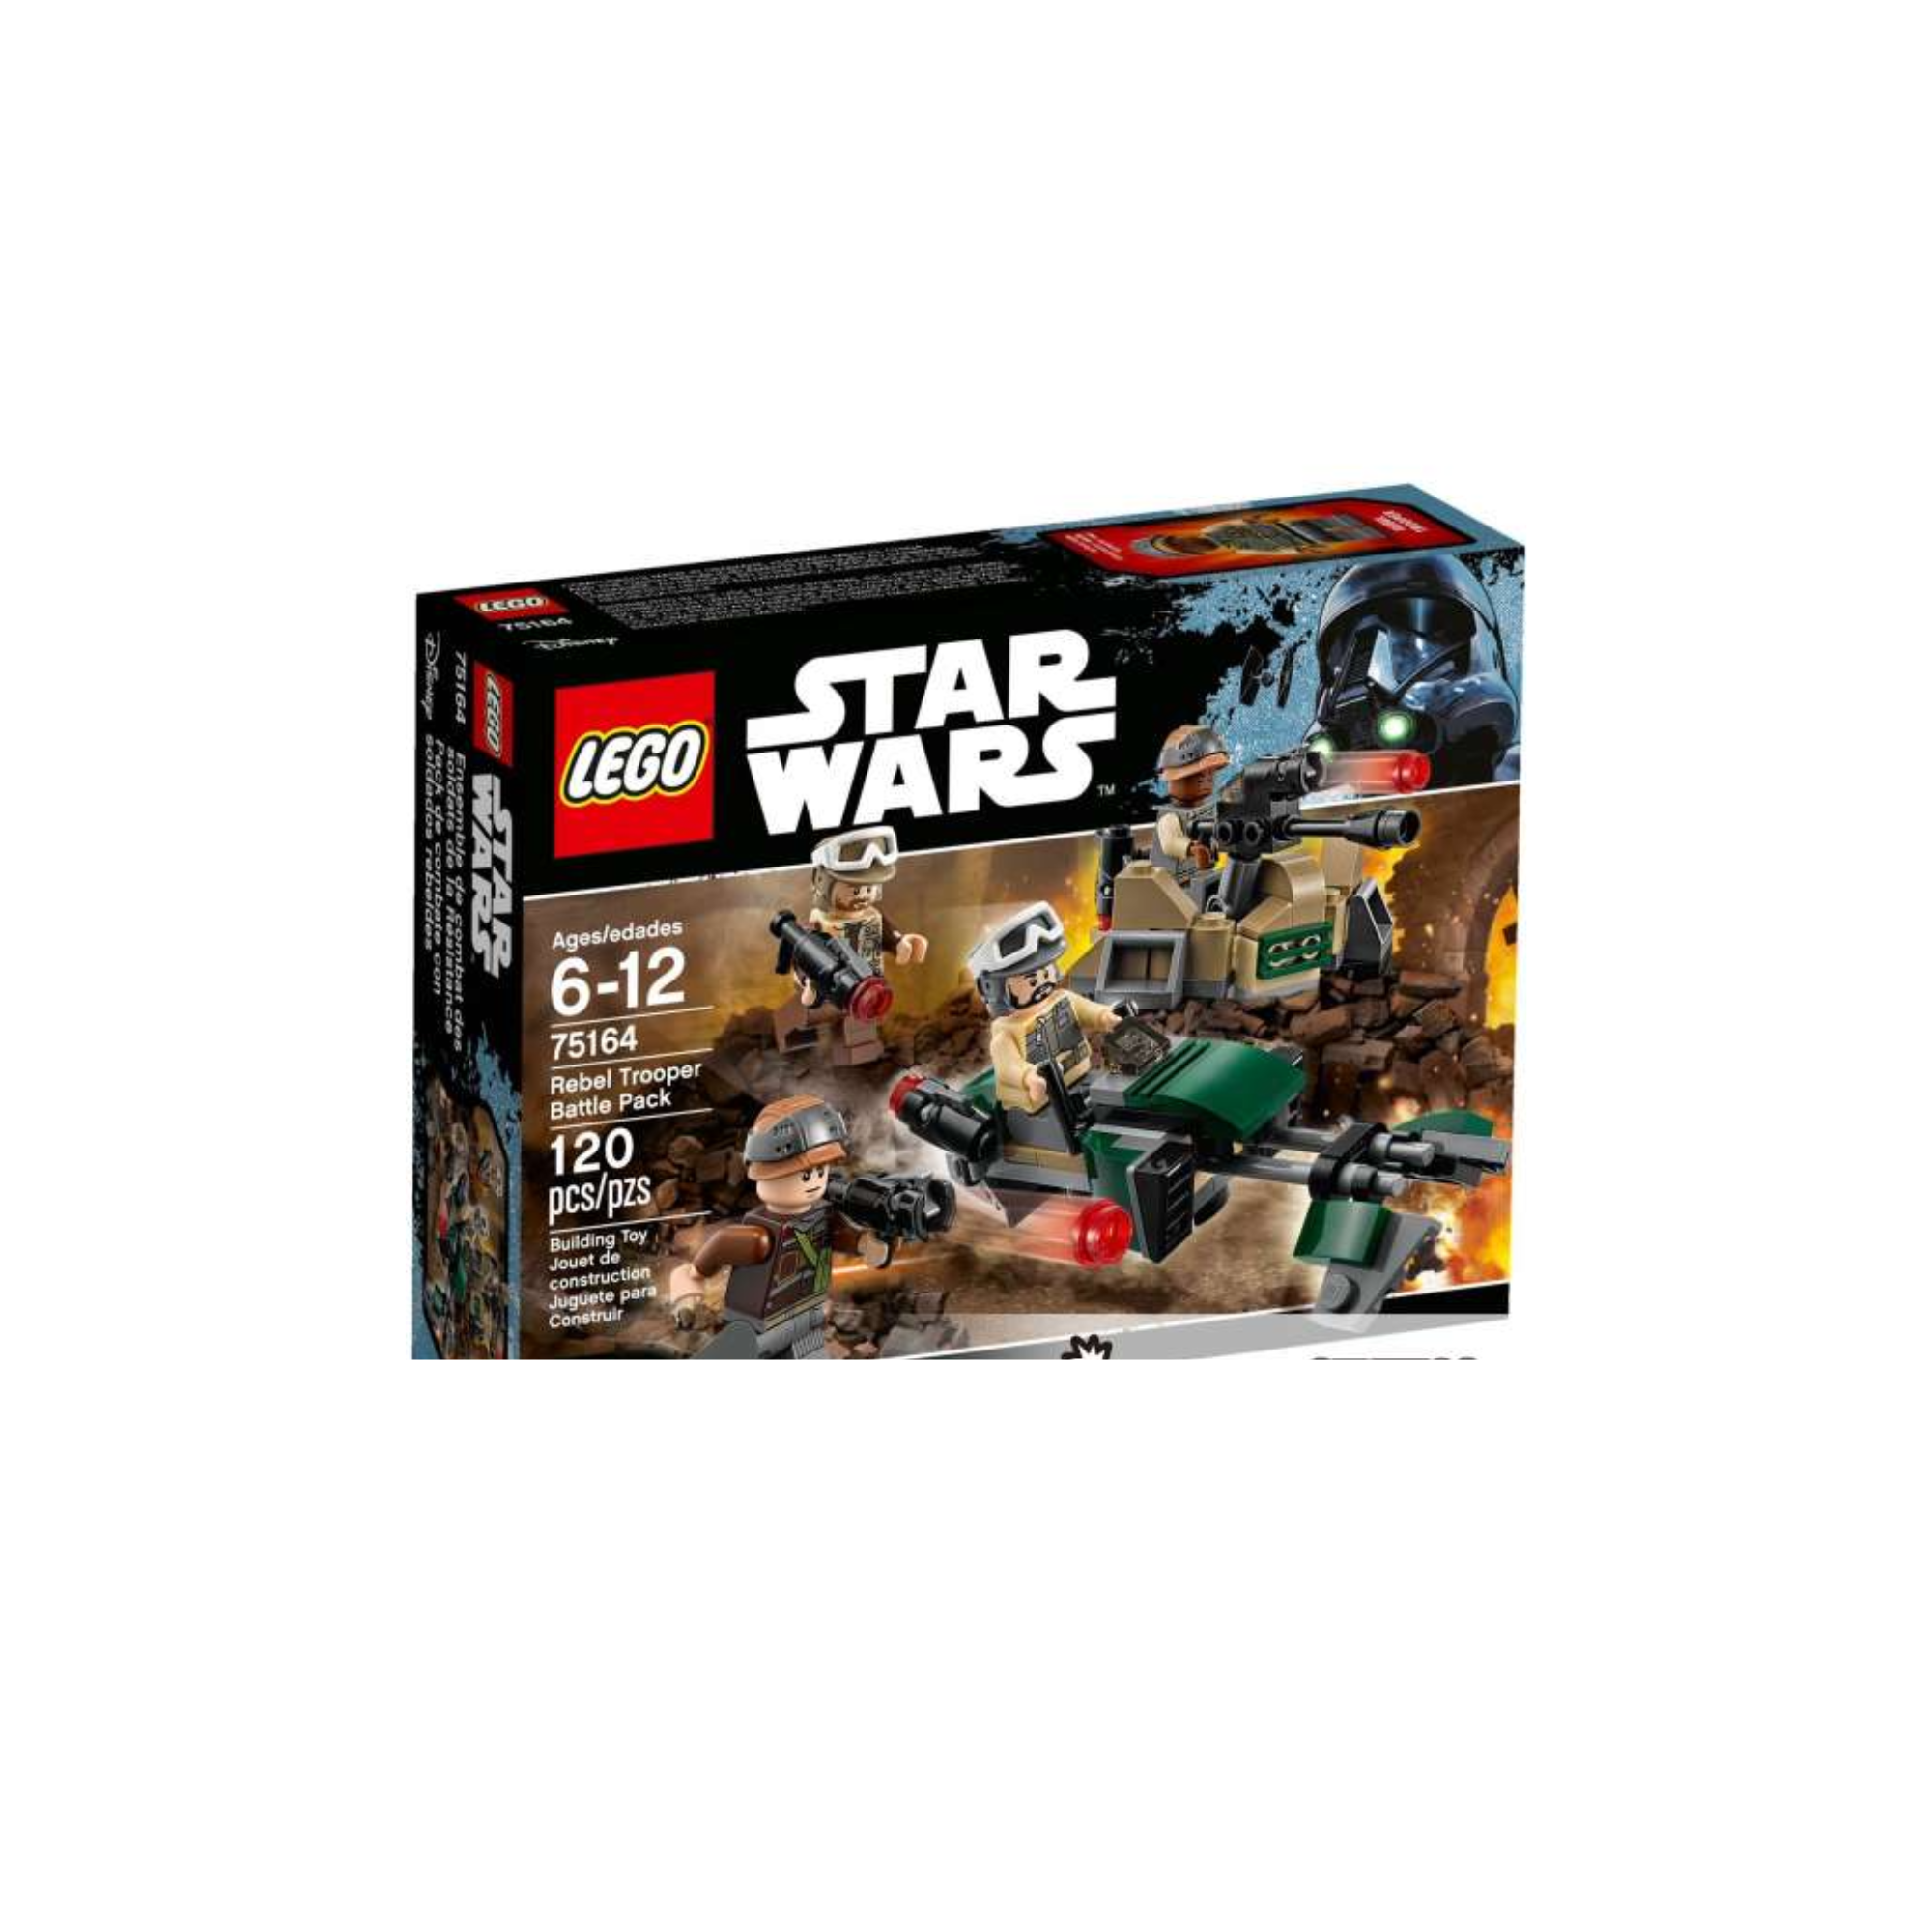 Star Wars Lego Rebel Trooper Battle Pack